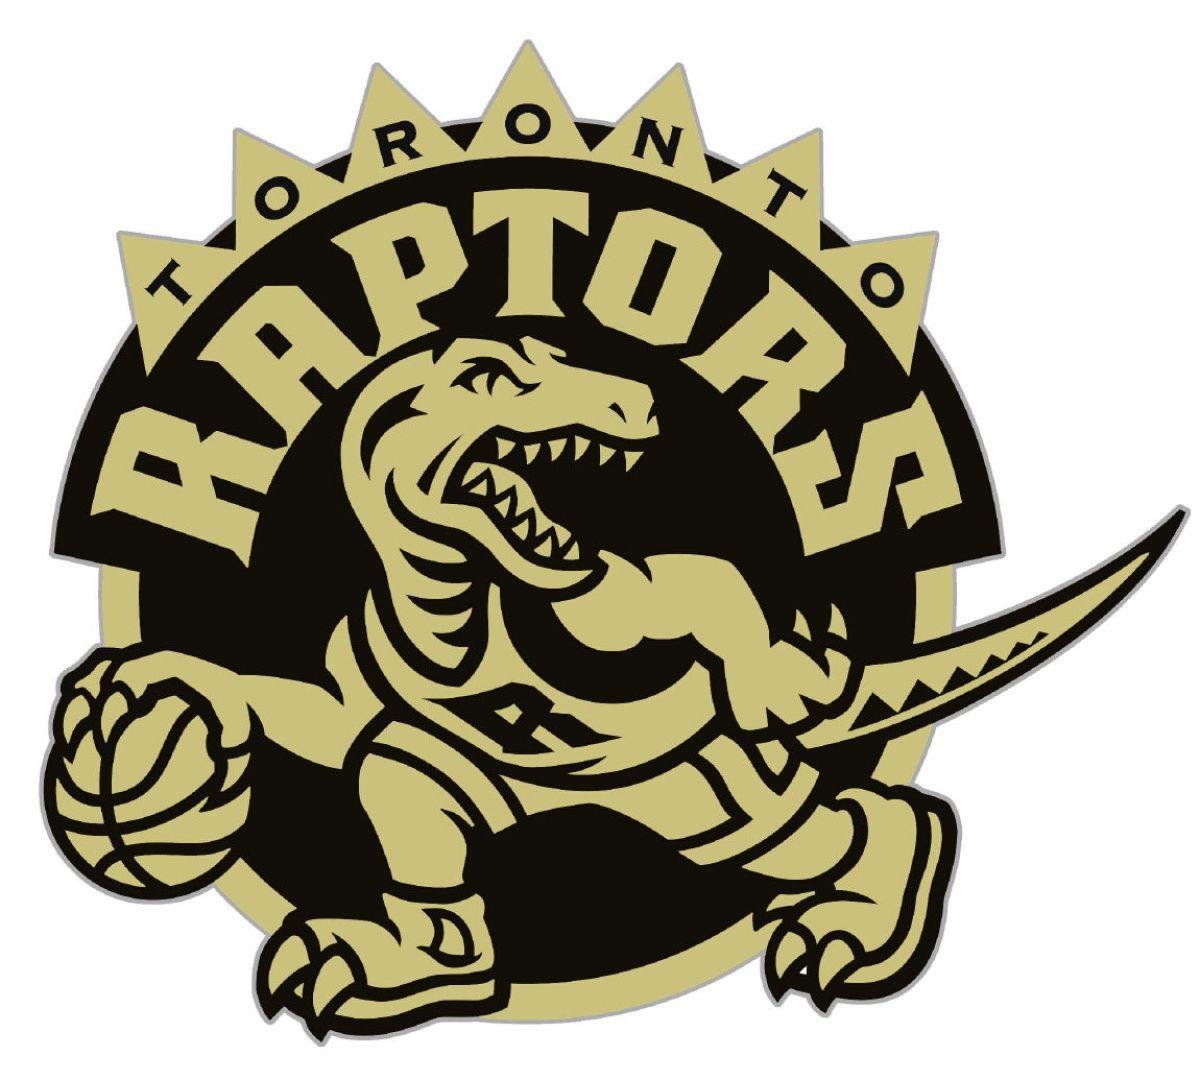 Ovo Raptors Logo - Raptors rebranding: Which colour scheme fits best?